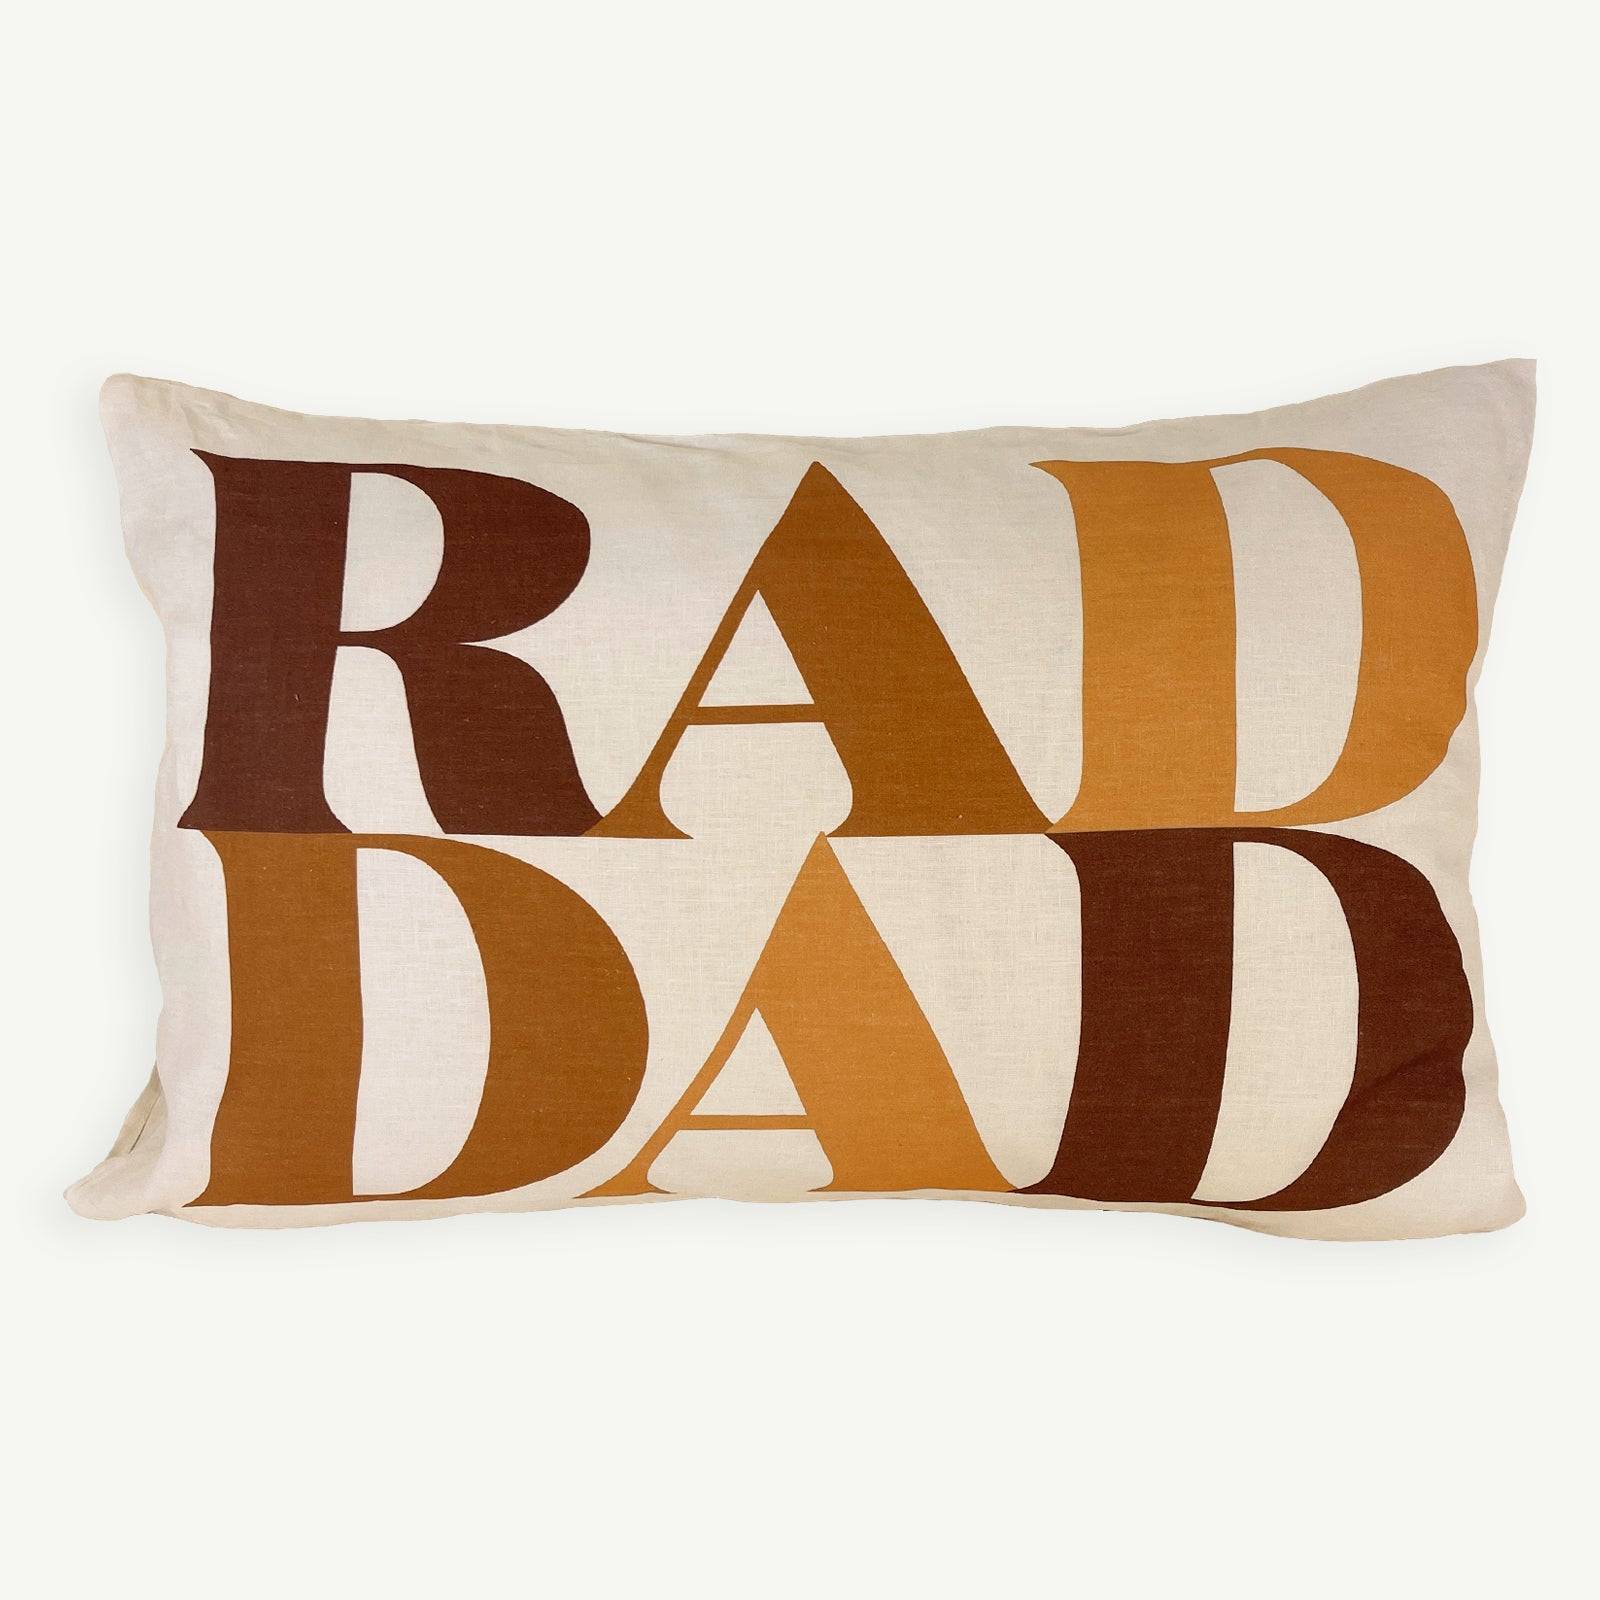 Rad Dad Standard Pillowcase